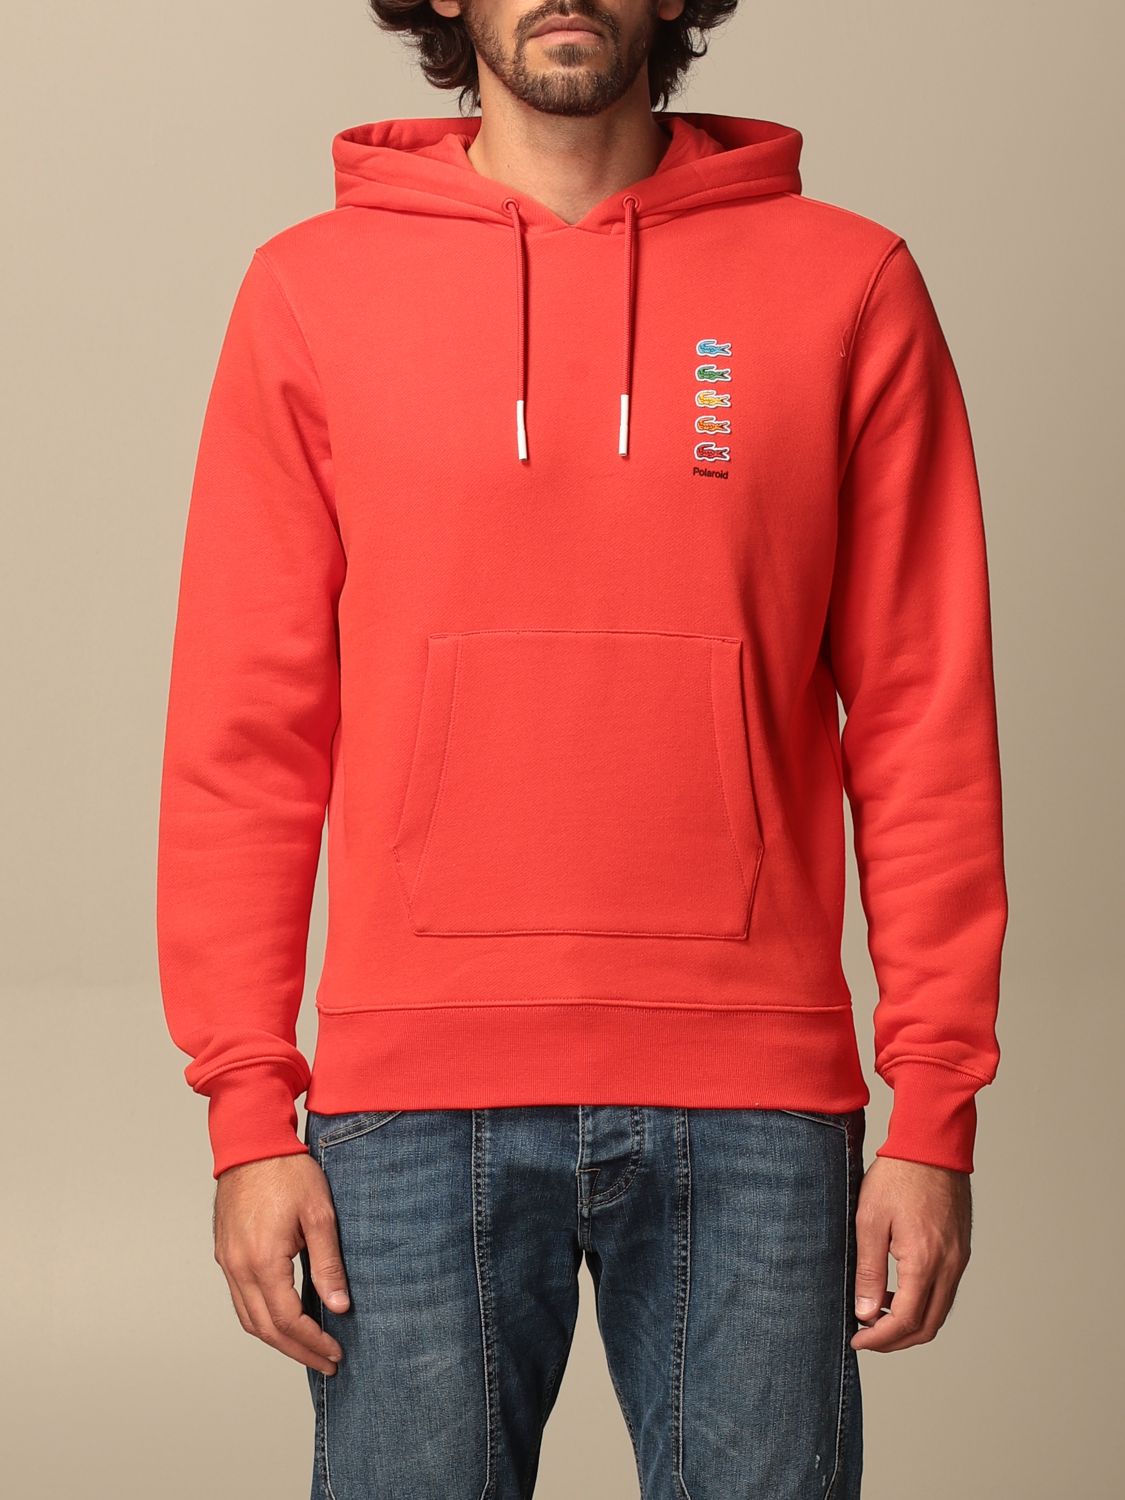 Selvforkælelse uklar navigation LACOSTE X POLAROID: logo hoodie | Sweatshirt Lacoste X Polaroid Men Red | Sweatshirt  Lacoste X Polaroid SH5661 GIGLIO.COM